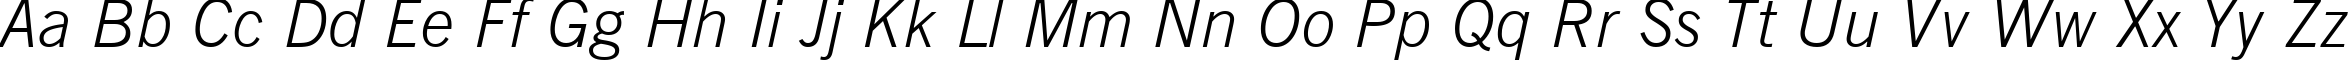 Пример написания английского алфавита шрифтом News Gothic Light Italic BT